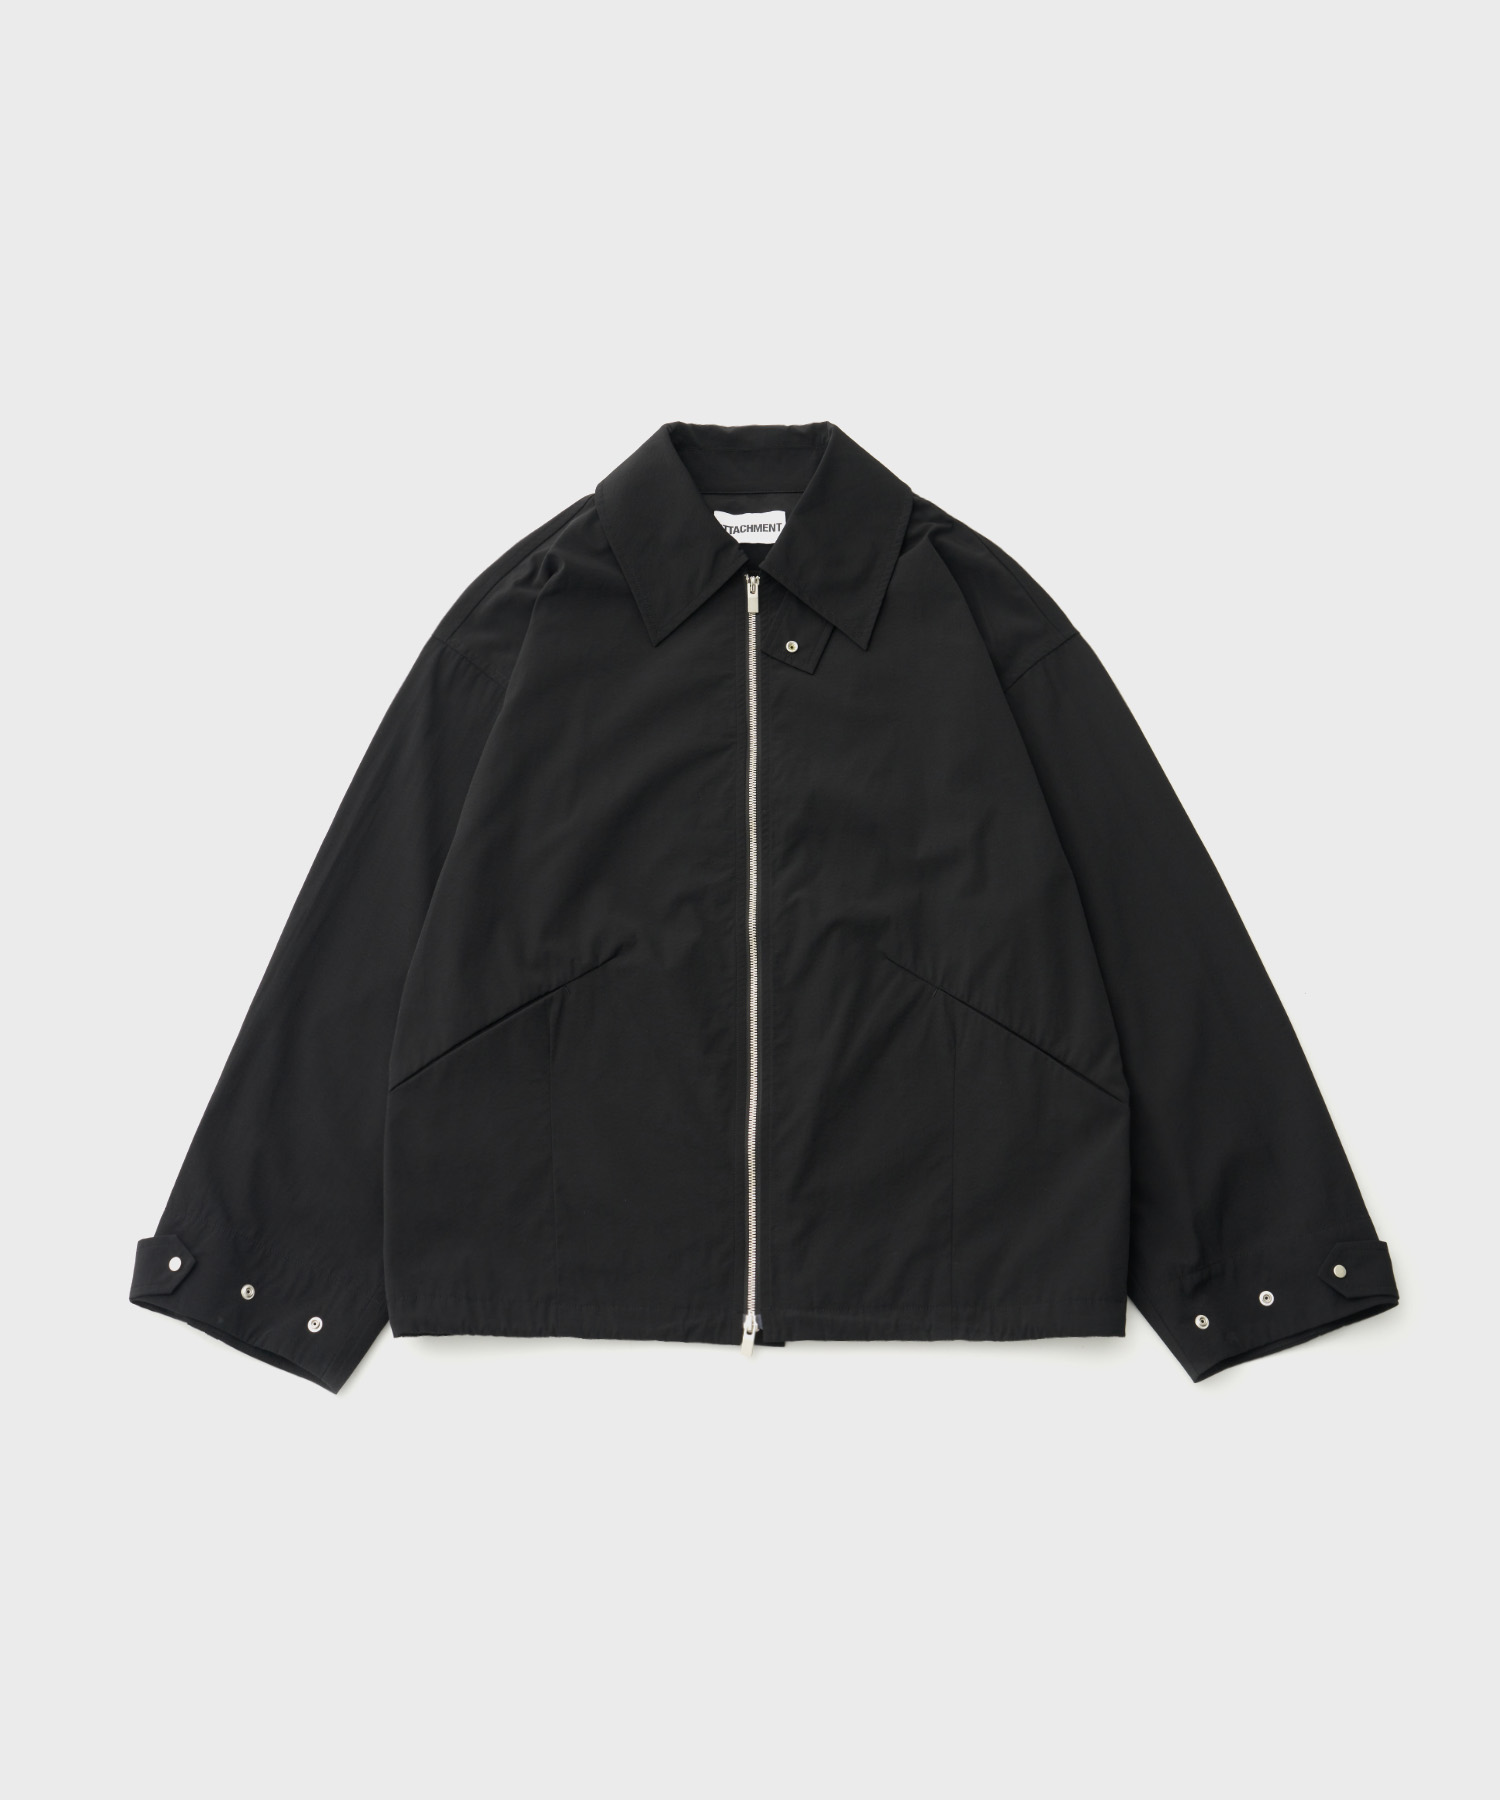 CO/NY Weather Cloth MK3 Jacket (Black)